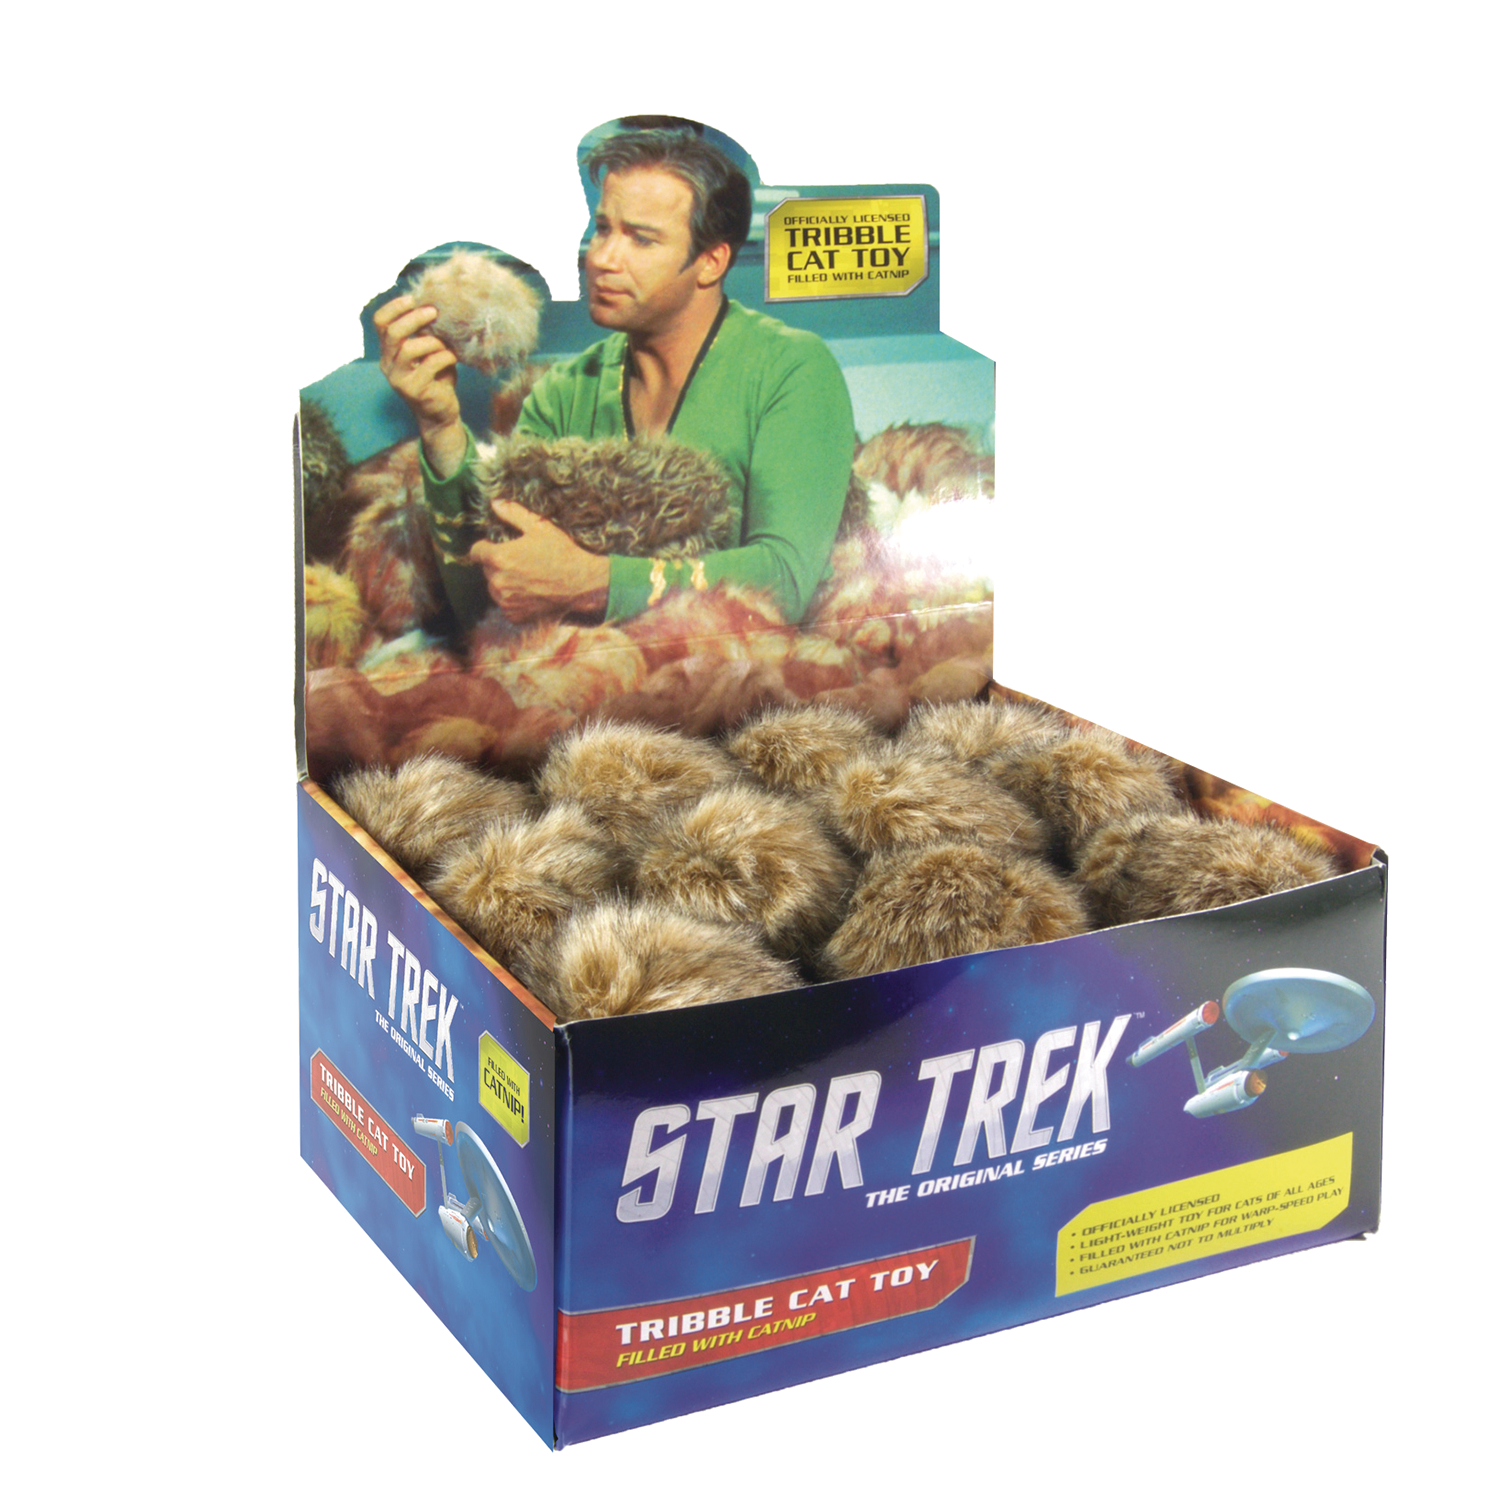 Star Trek Tos Tribble Cat Toy 24ct Display